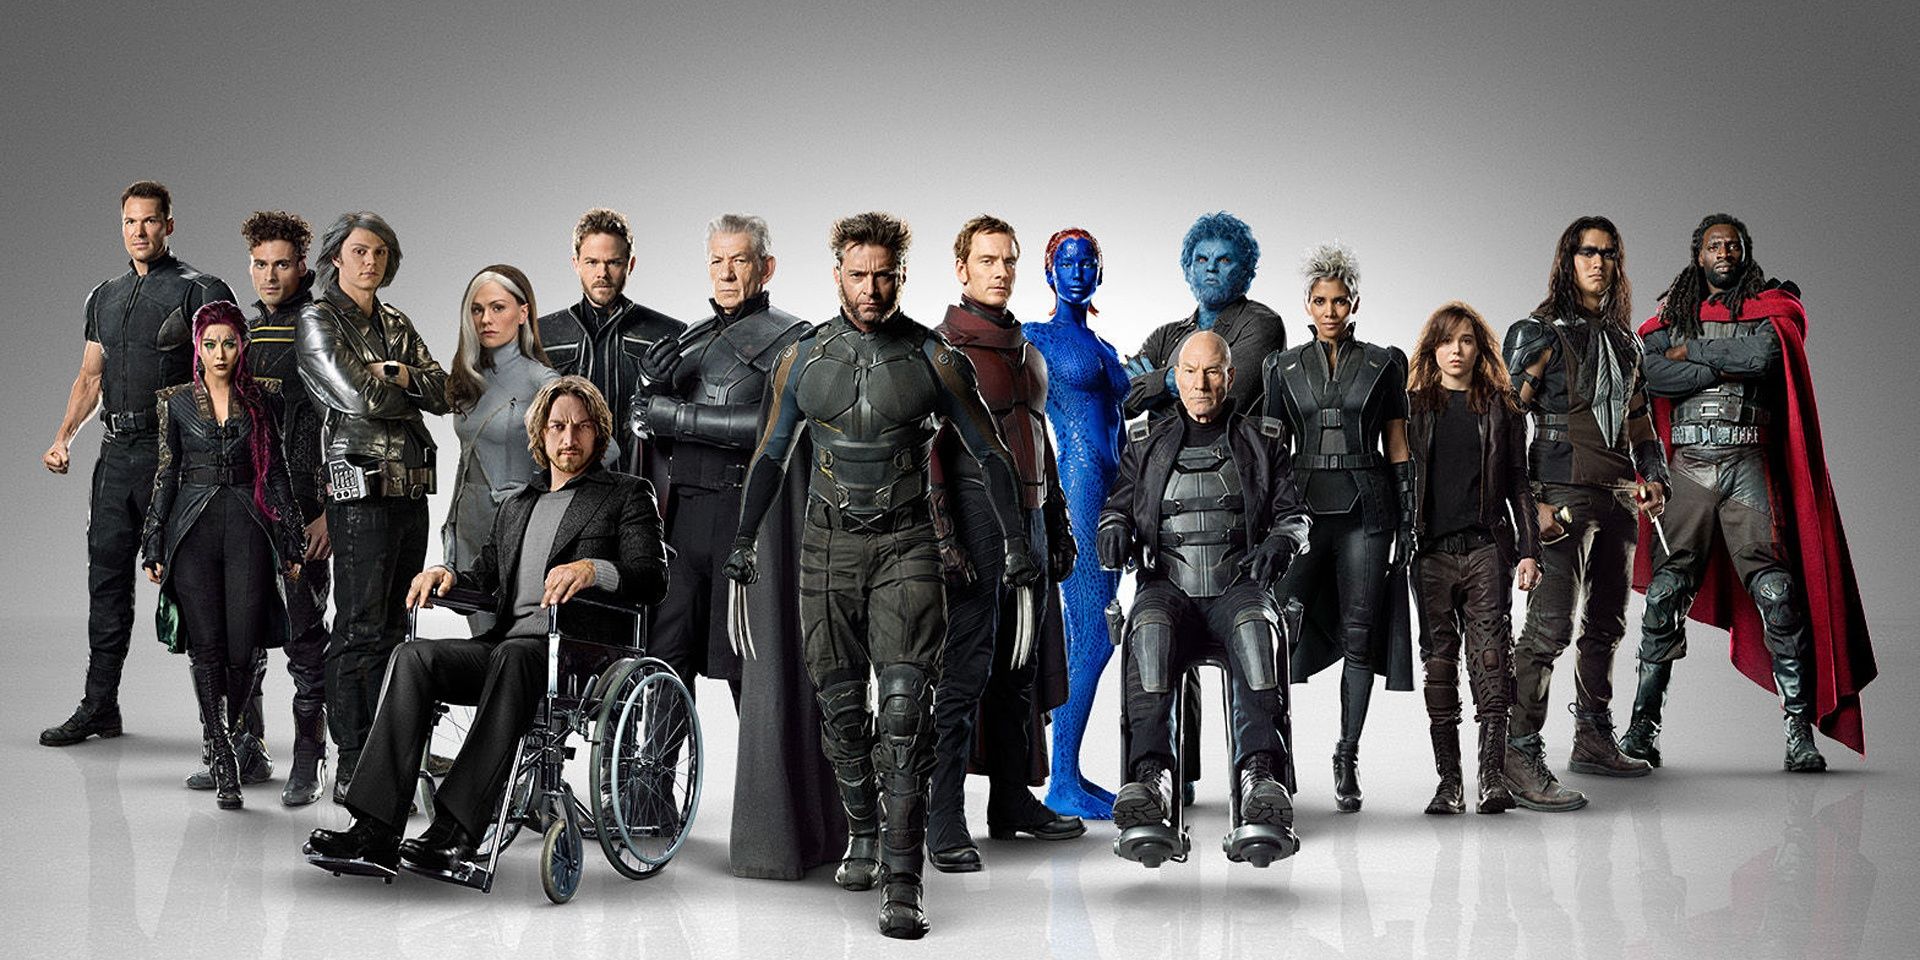 X-Men franchise full cast Hugh Jackman, James McAvoy, Patrick Stewart, Jennifer Lawrence